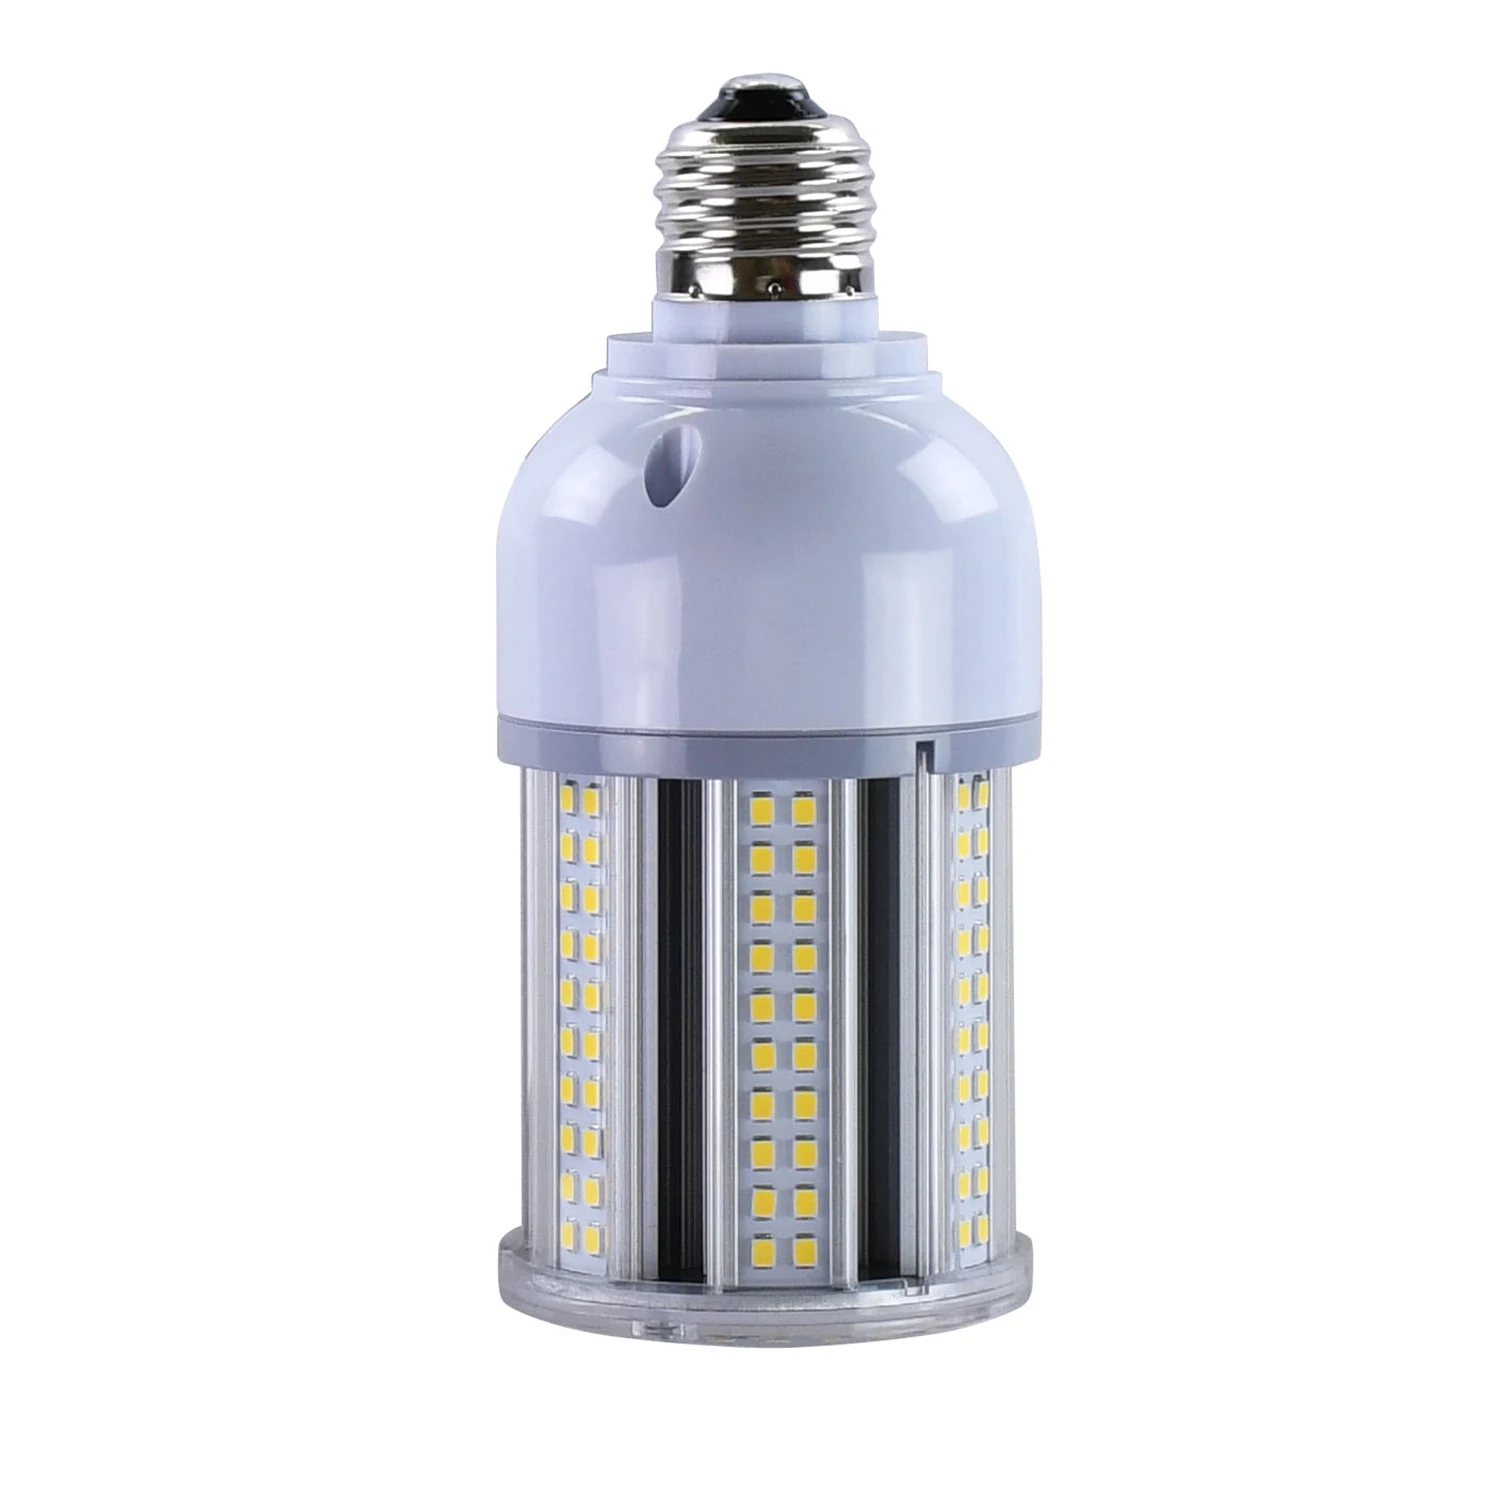 Waterproof design IP64 25W  LED corn bulb  E26  2700-6500K  ETL List High Quality High Efficiency led light